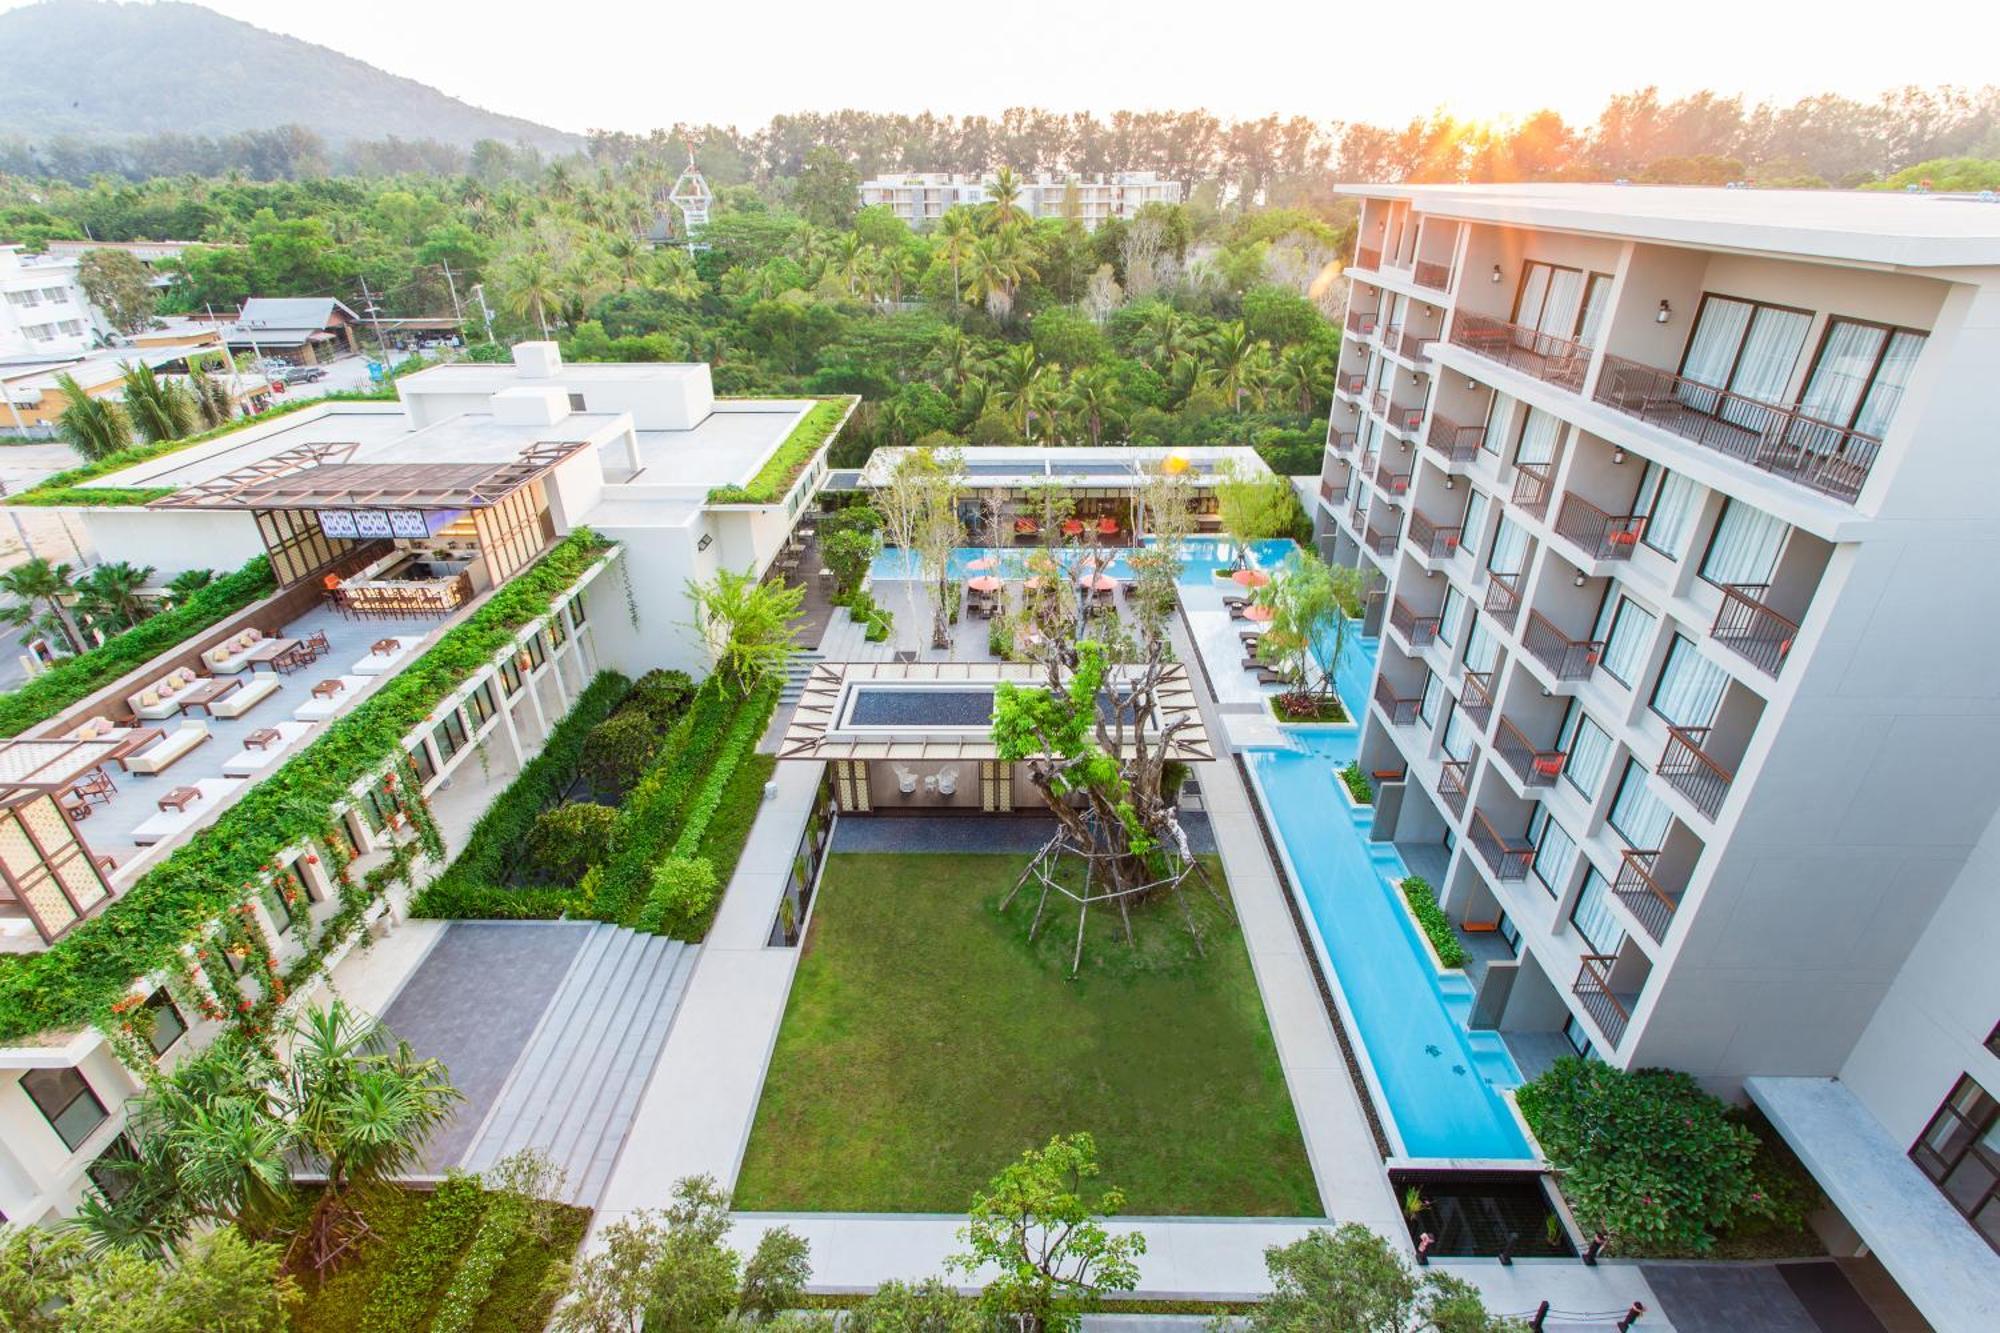 Proud Phuket Hotel, Naiyang Beach Buitenkant foto